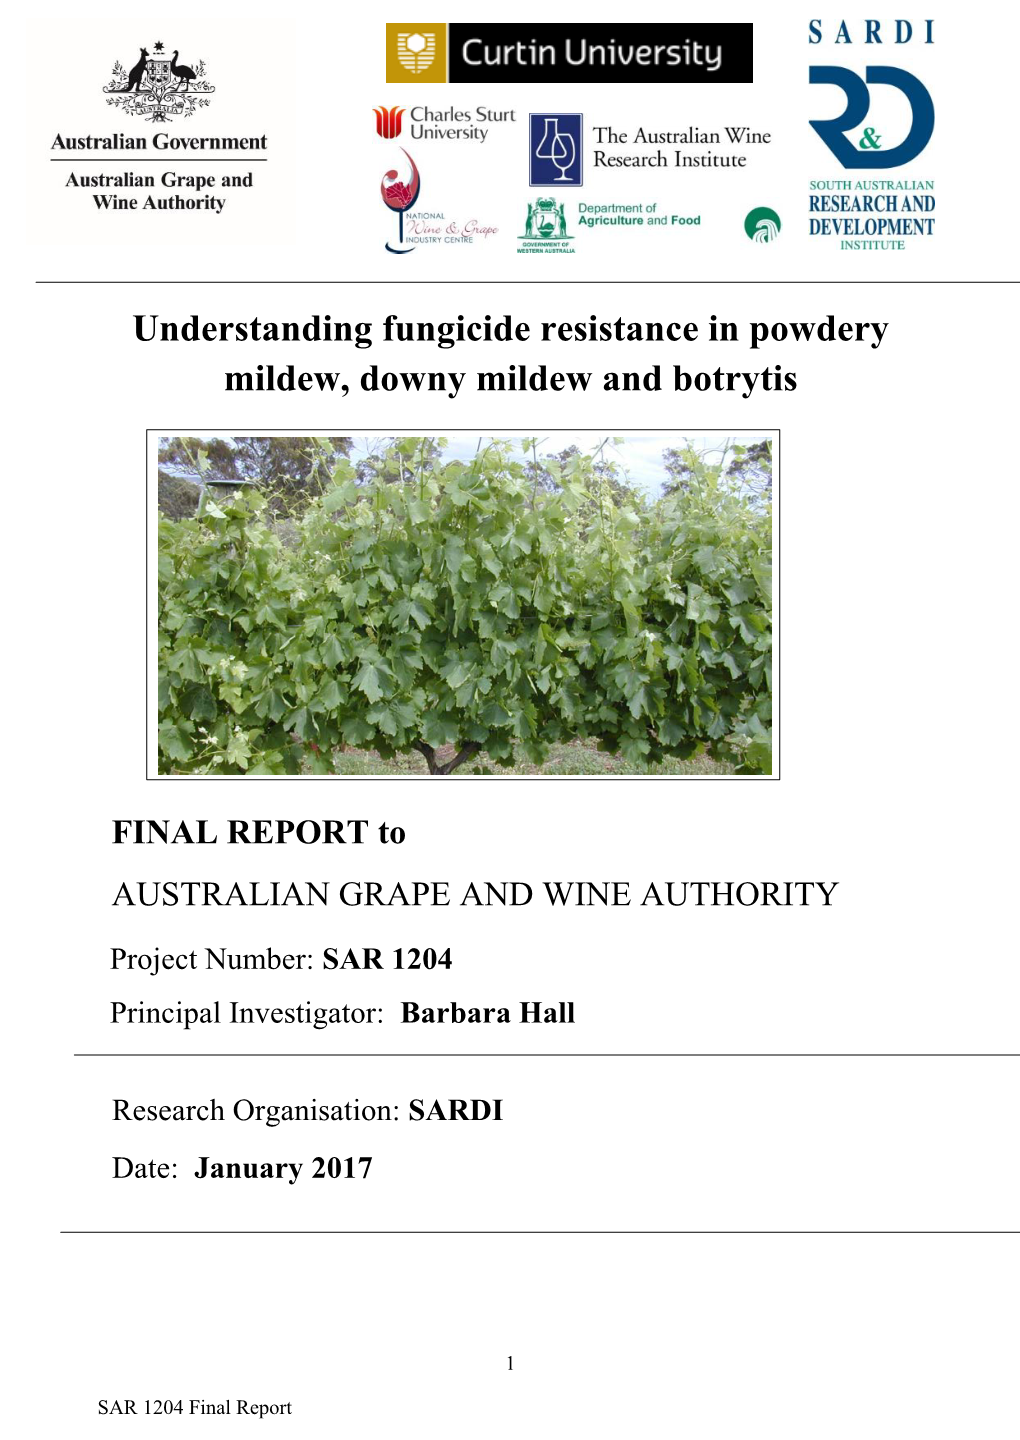 Understanding Fungicide Resistance in Powdery Mildew, Downy Mildew and Botrytis